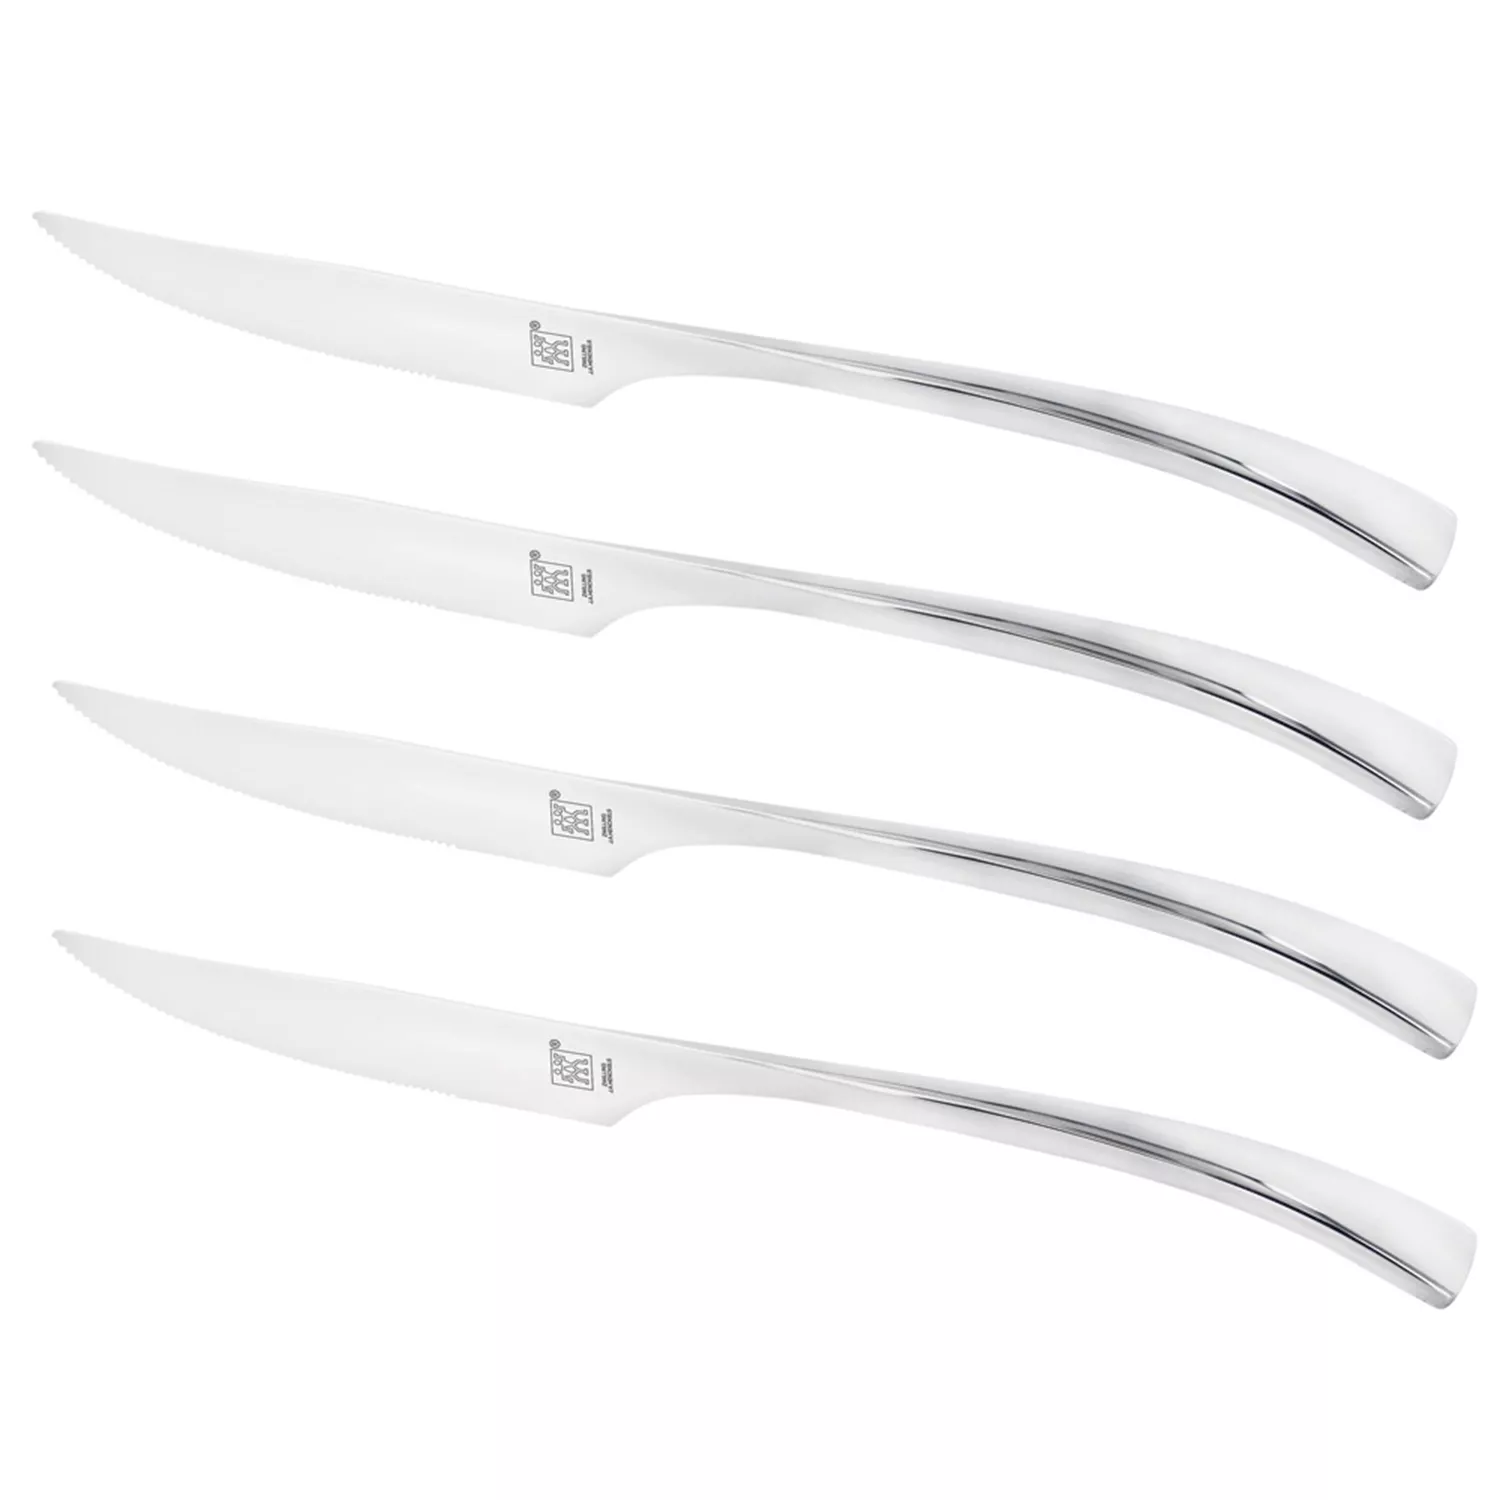 Zwilling J.A. Henckels Pro Steak Knives, Set of 4